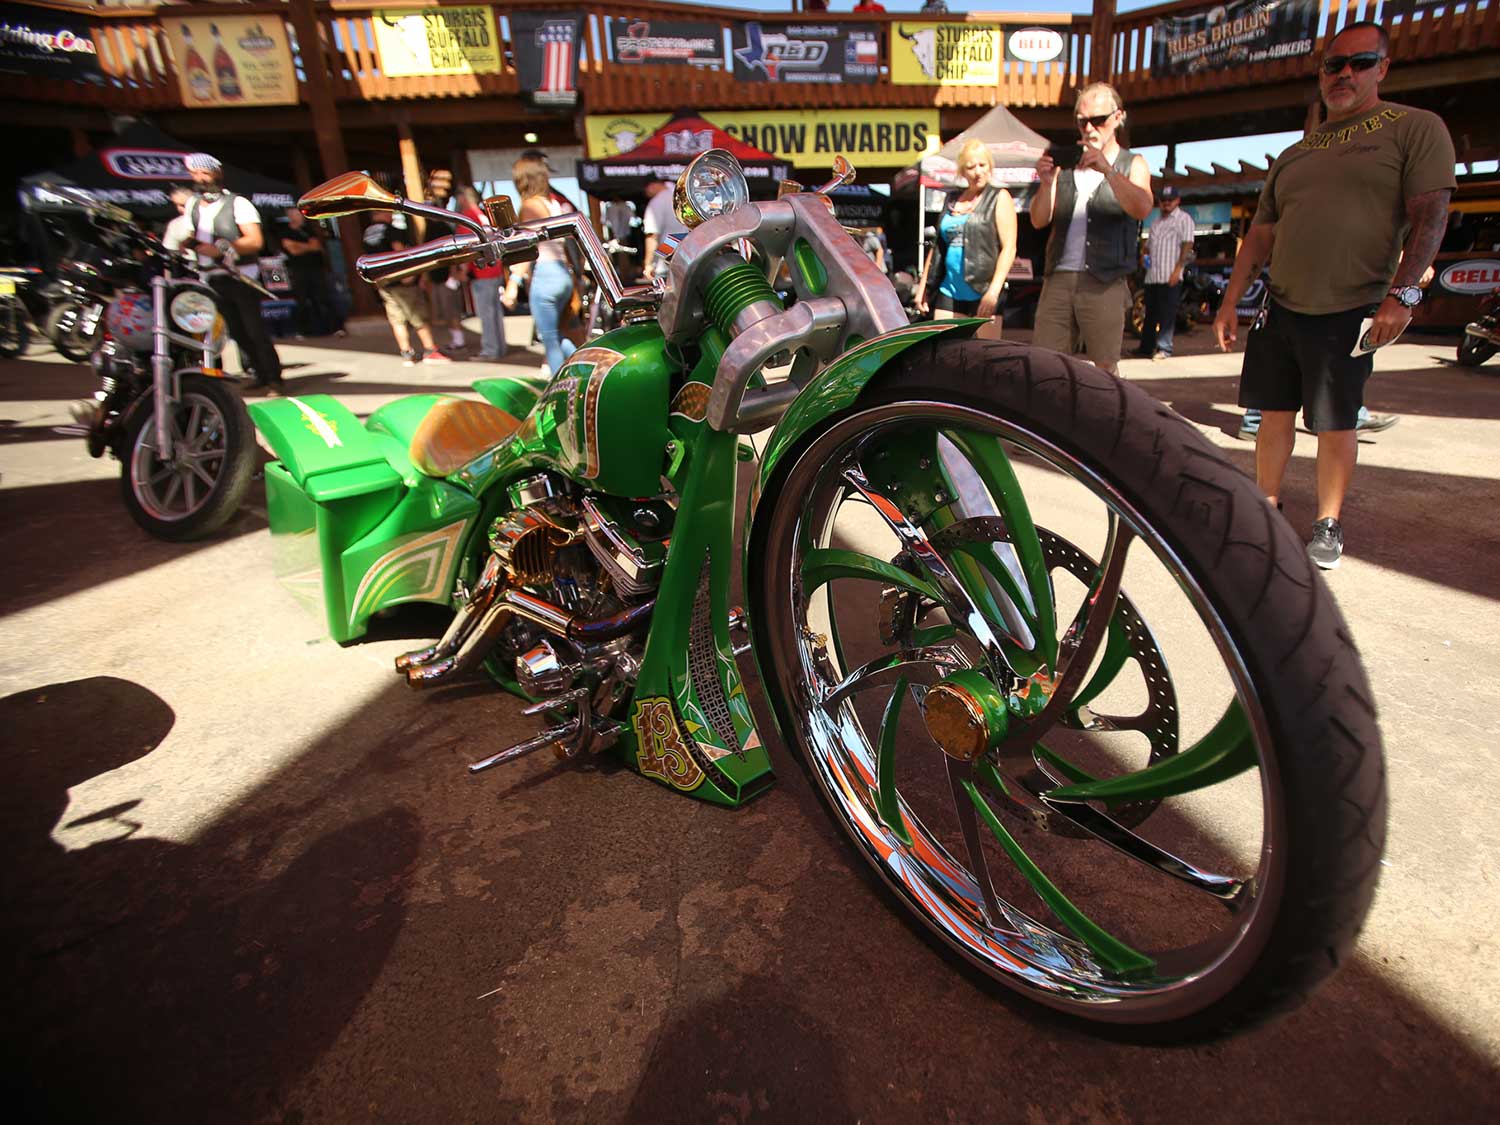 Custom green motorcycle at Sturgis 2020